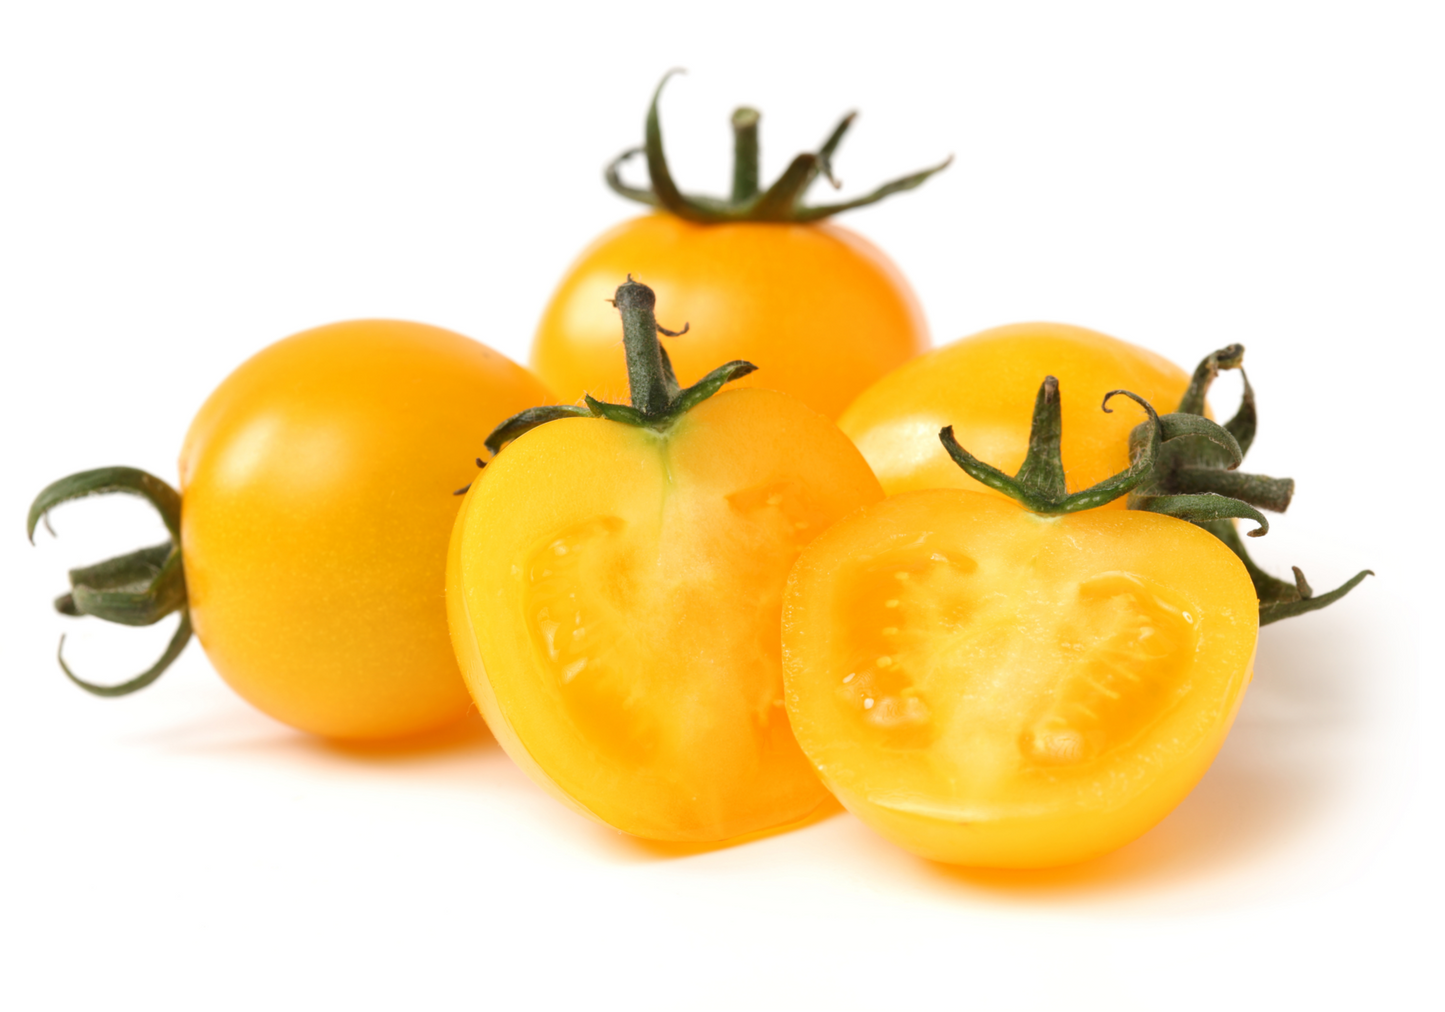 Heritage Tomato Plants - 'Honeycombe' - 3 x Large Plants in 10.5cm Pots